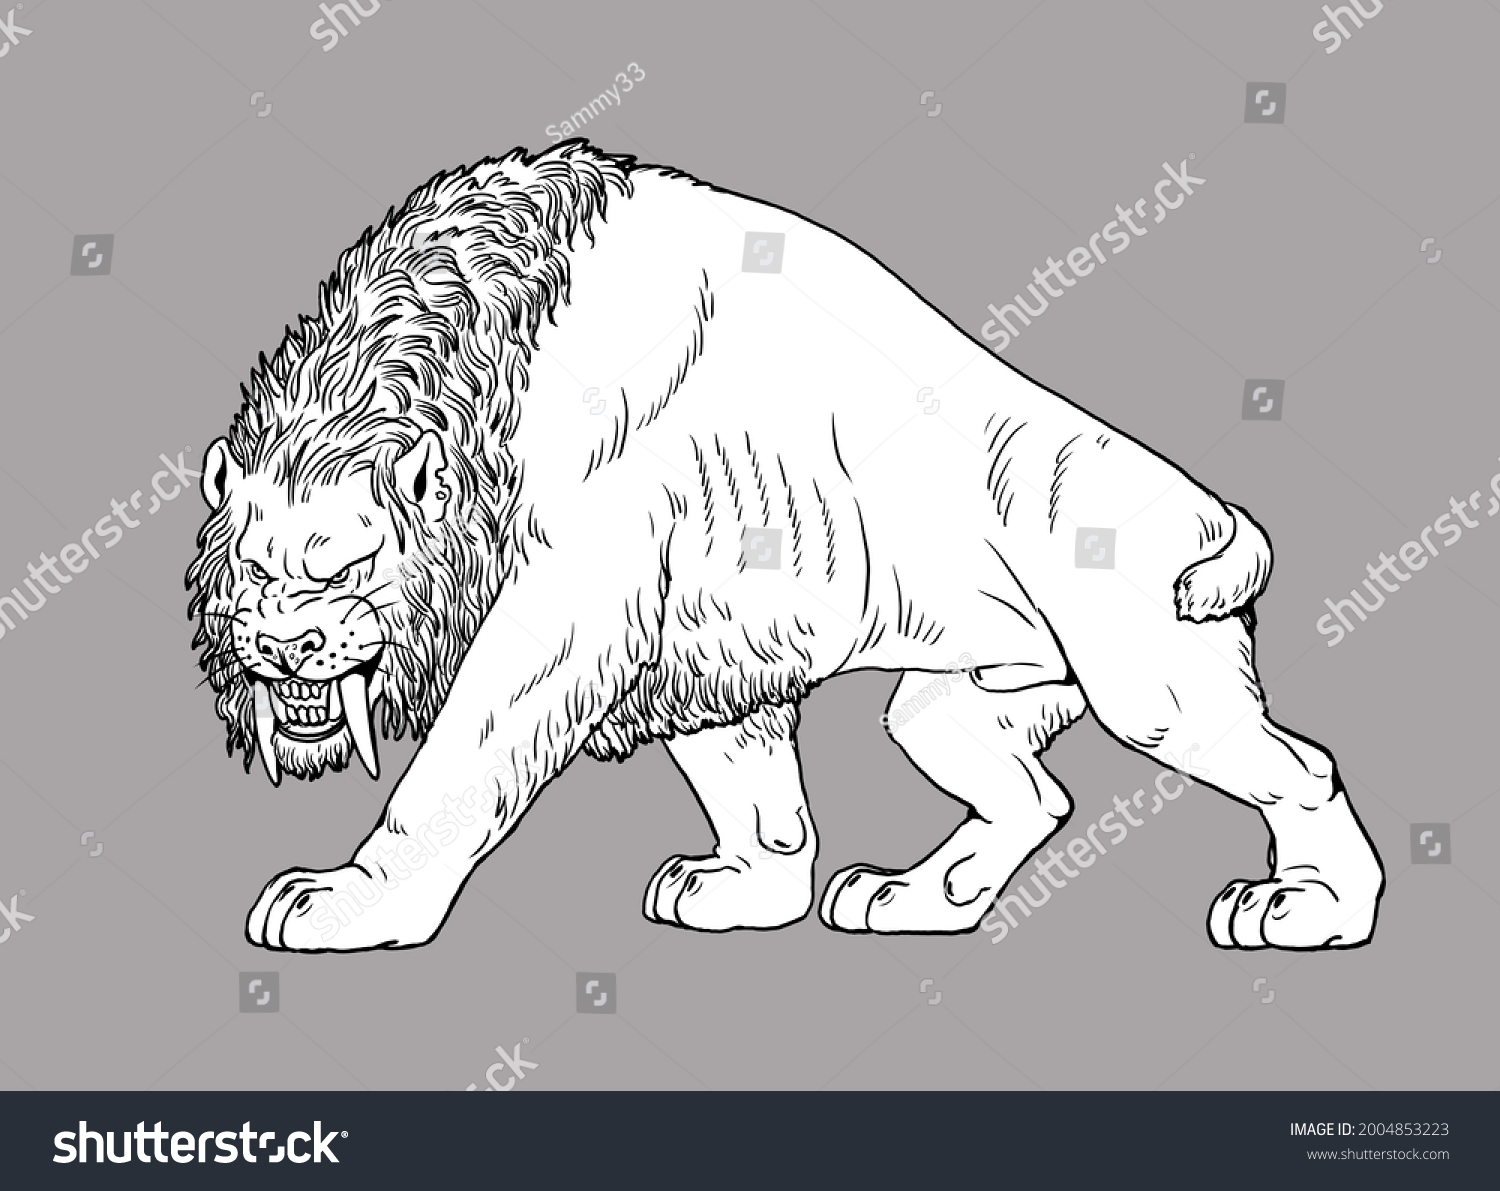 Saber tooth cat on hunt animals stock illustration